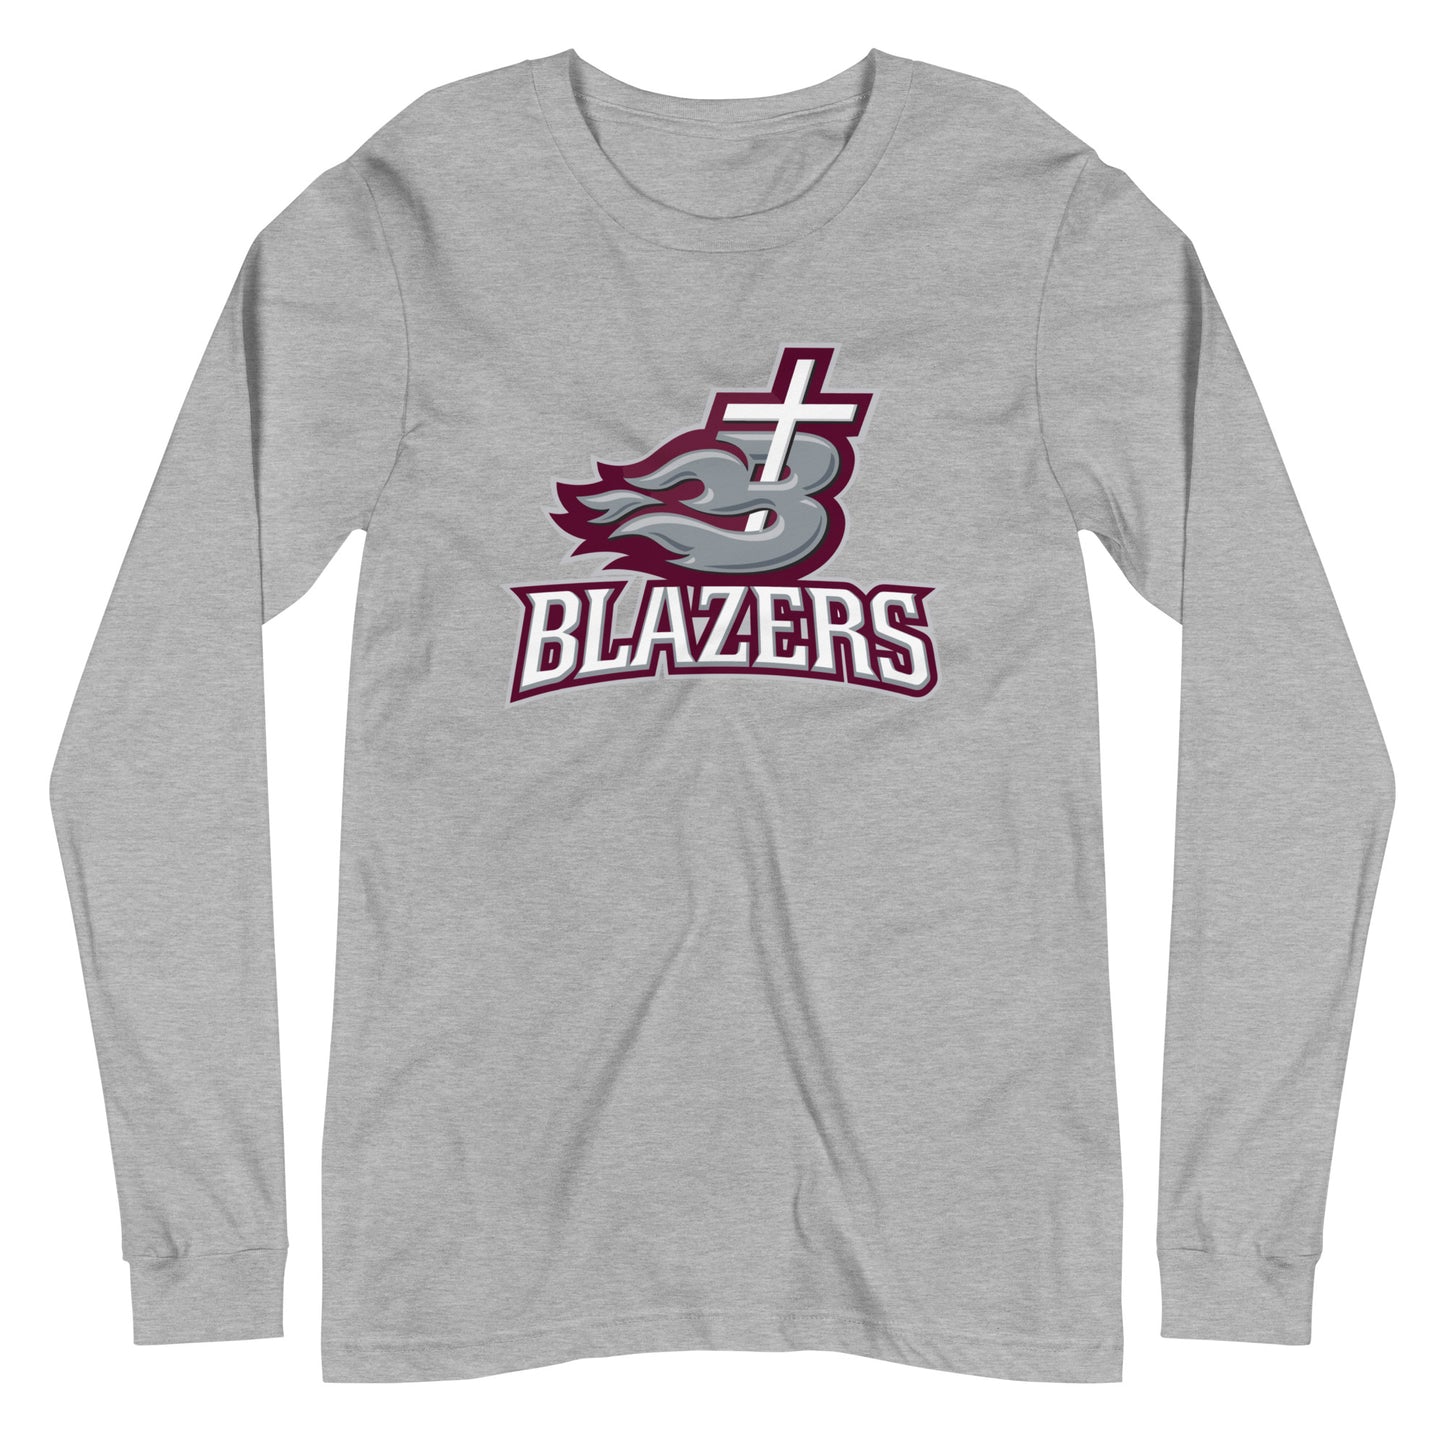 Blazers Unisex Long-Sleeve T-Shirt